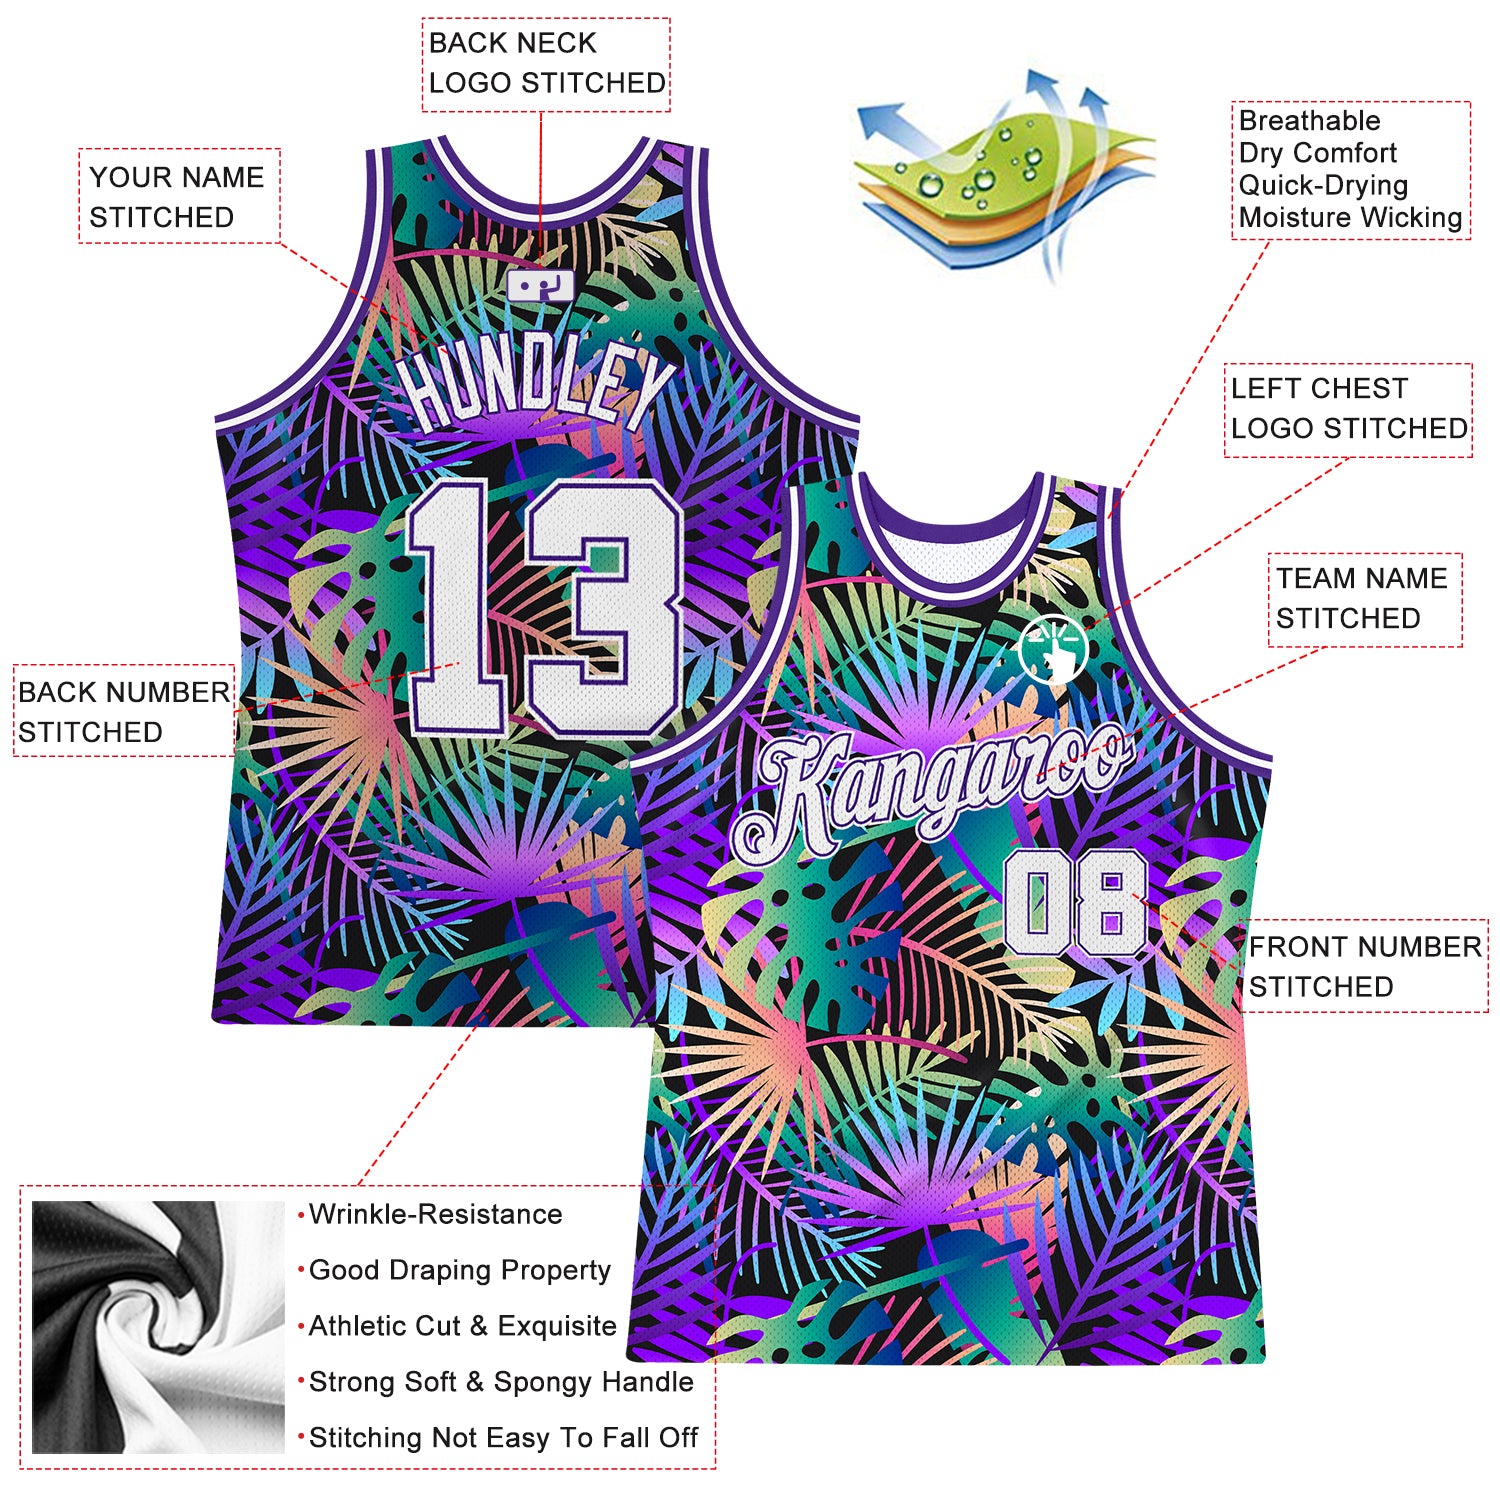 FANSIDEA Custom Purple White-Black Authentic City Edition Basketball Jersey Youth Size:L